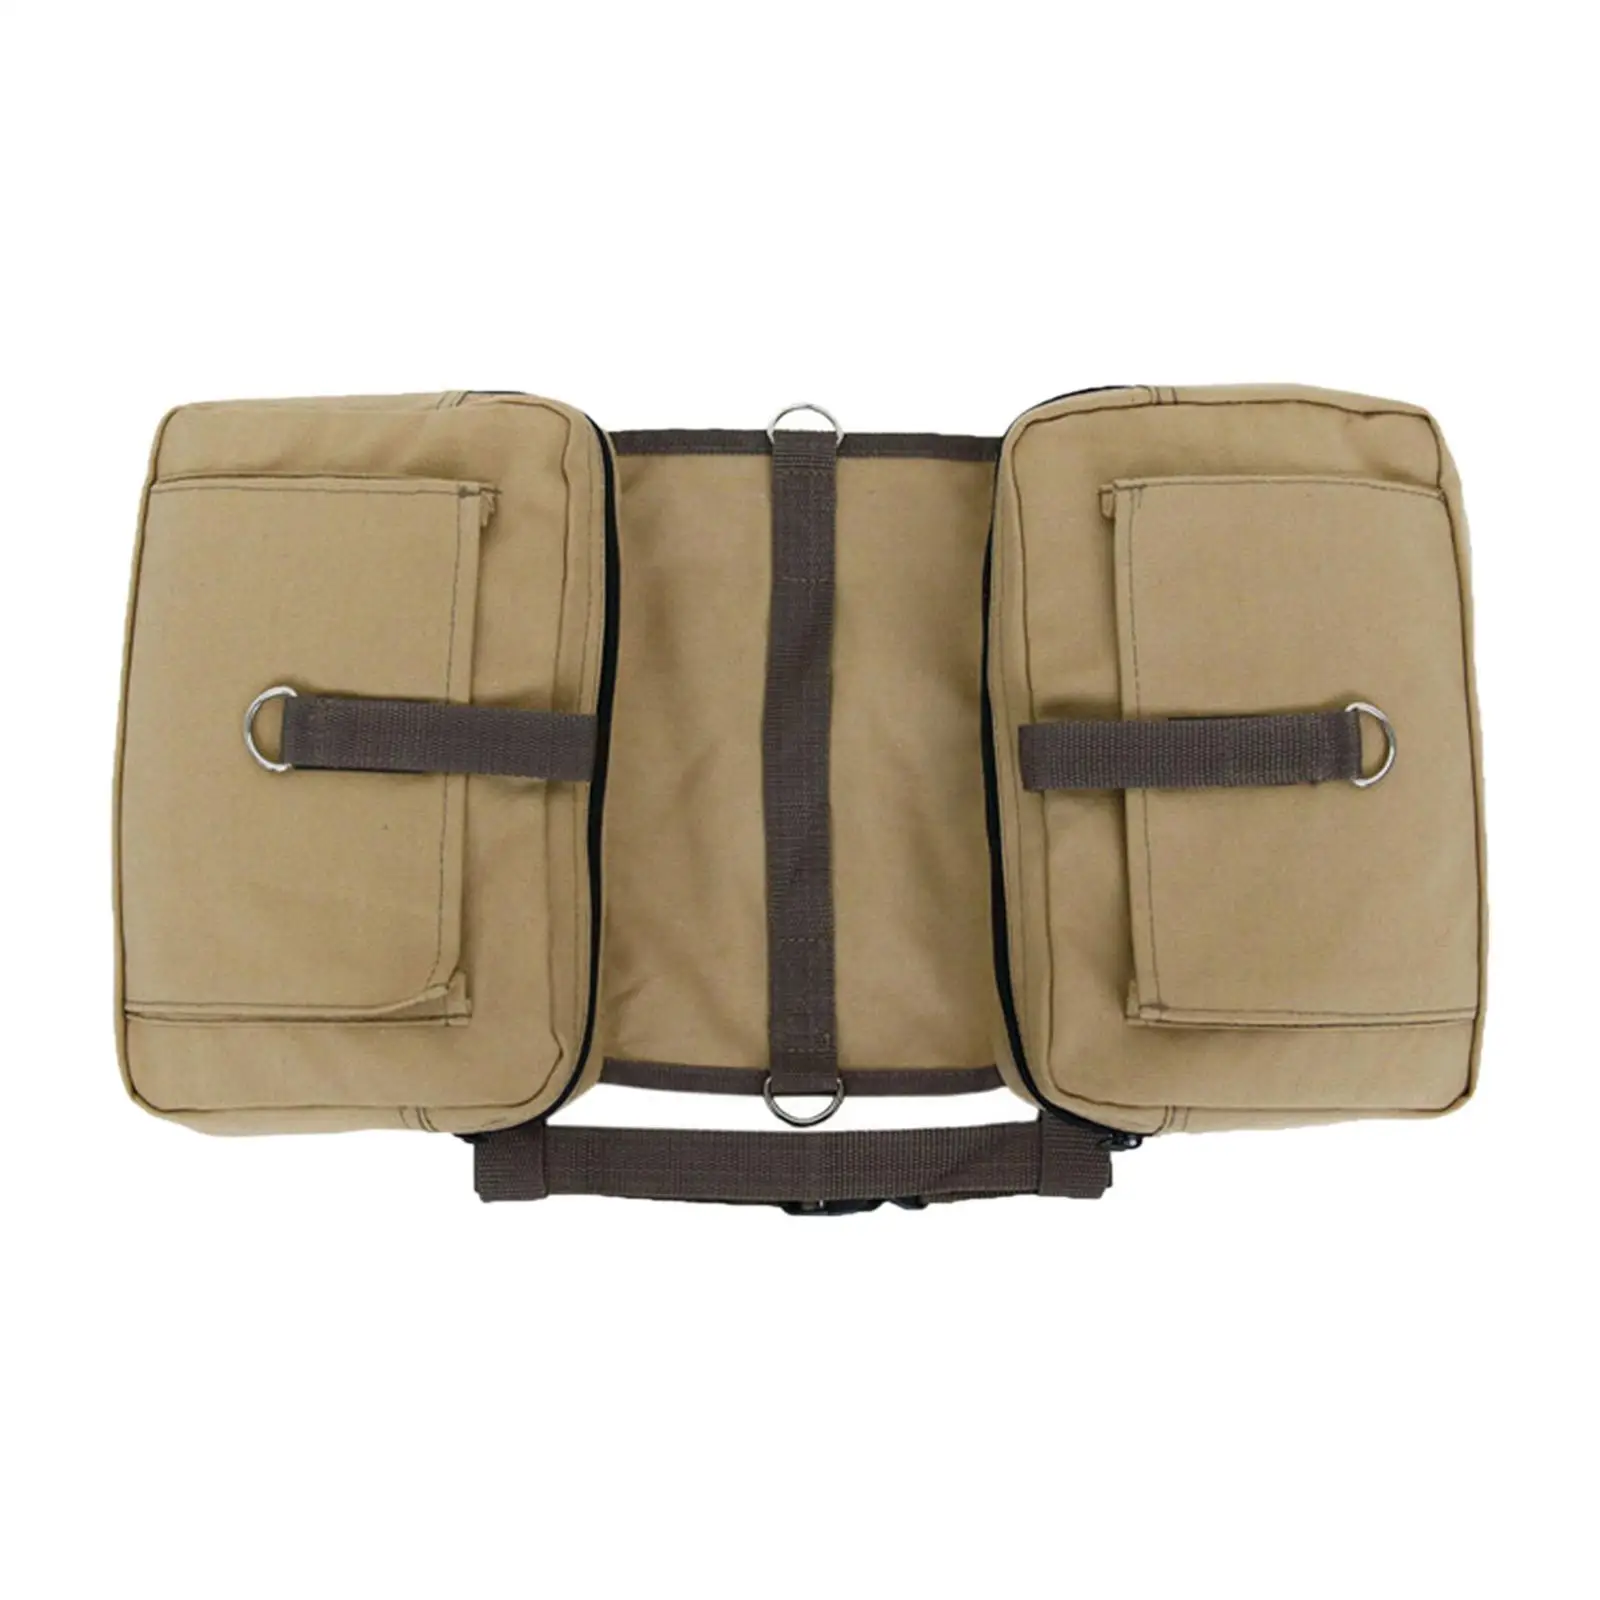 Dog Hiking Backpack Durable Camping Saddle Bag Saddlebag with Side Pockets